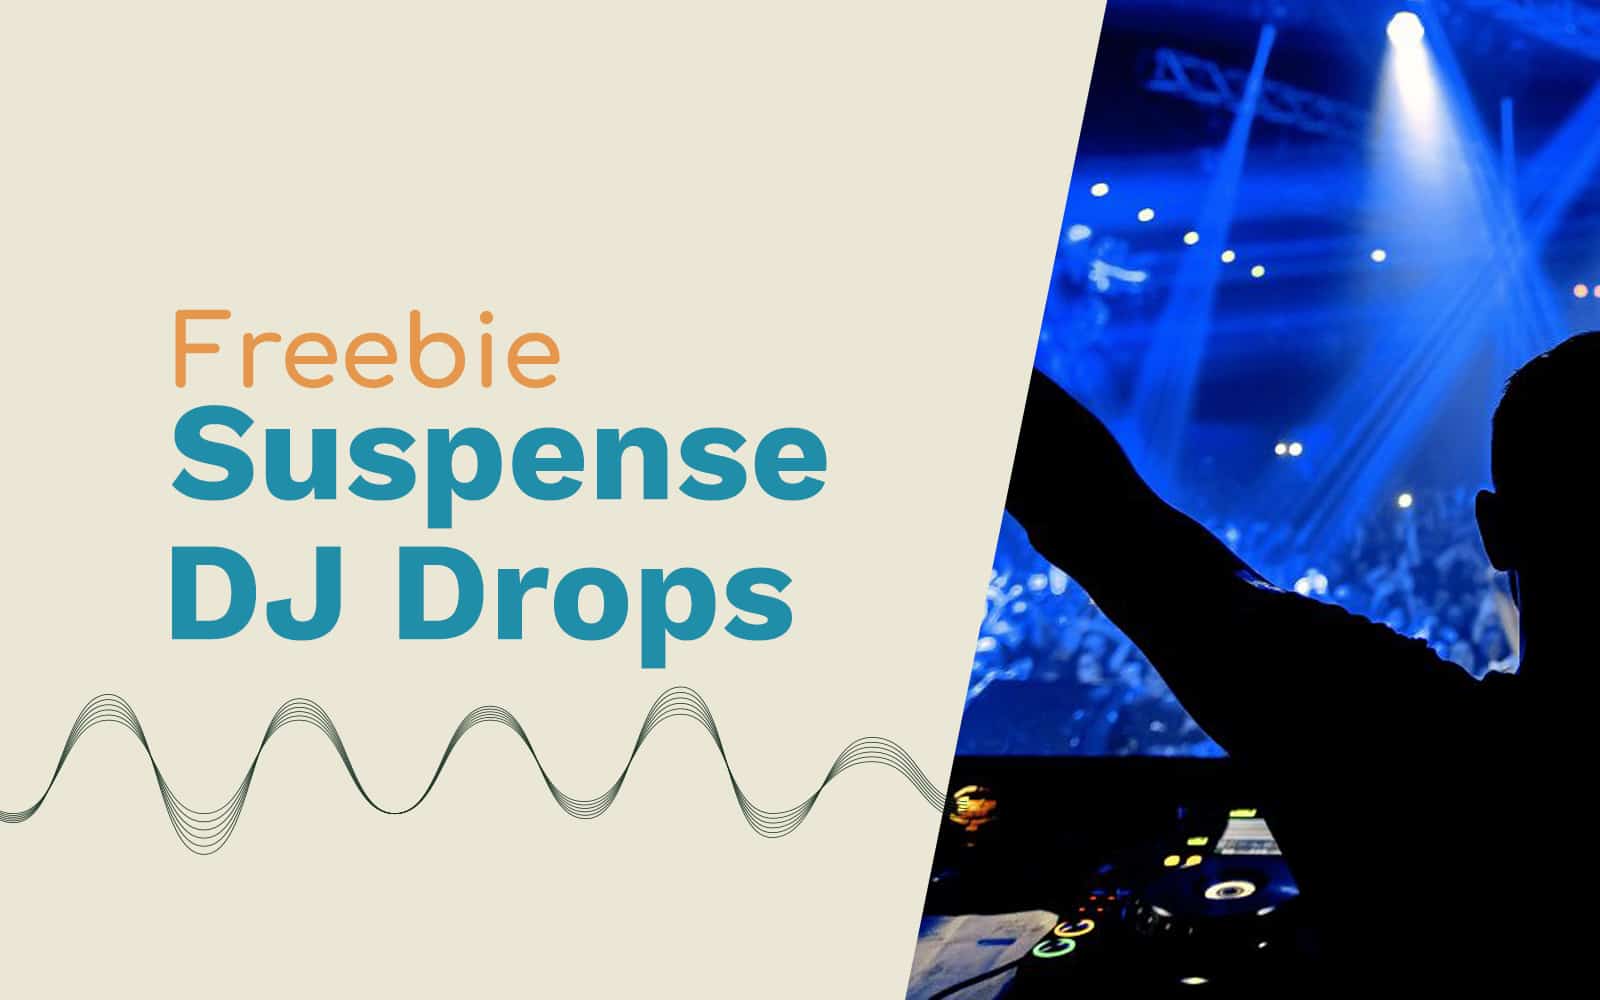 DJ Drops To Keep Your Listeners In Suspense DJ Drops DJ drops Music Radio Creative